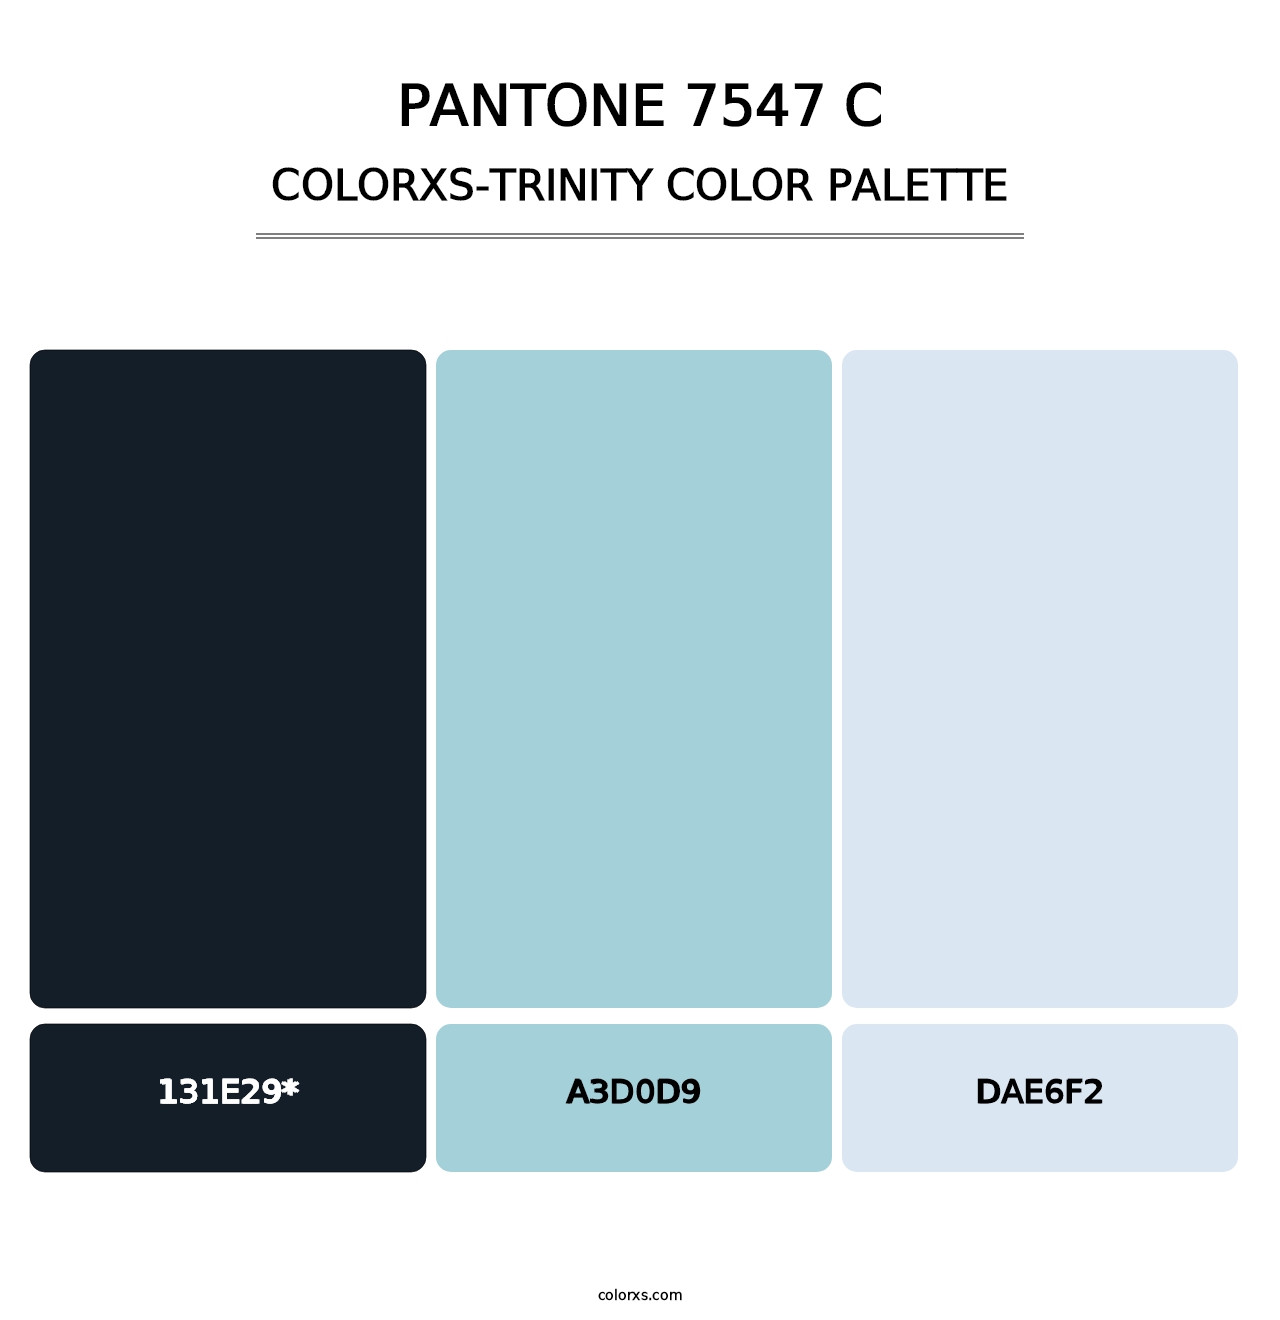 PANTONE 7547 C - Colorxs Trinity Palette